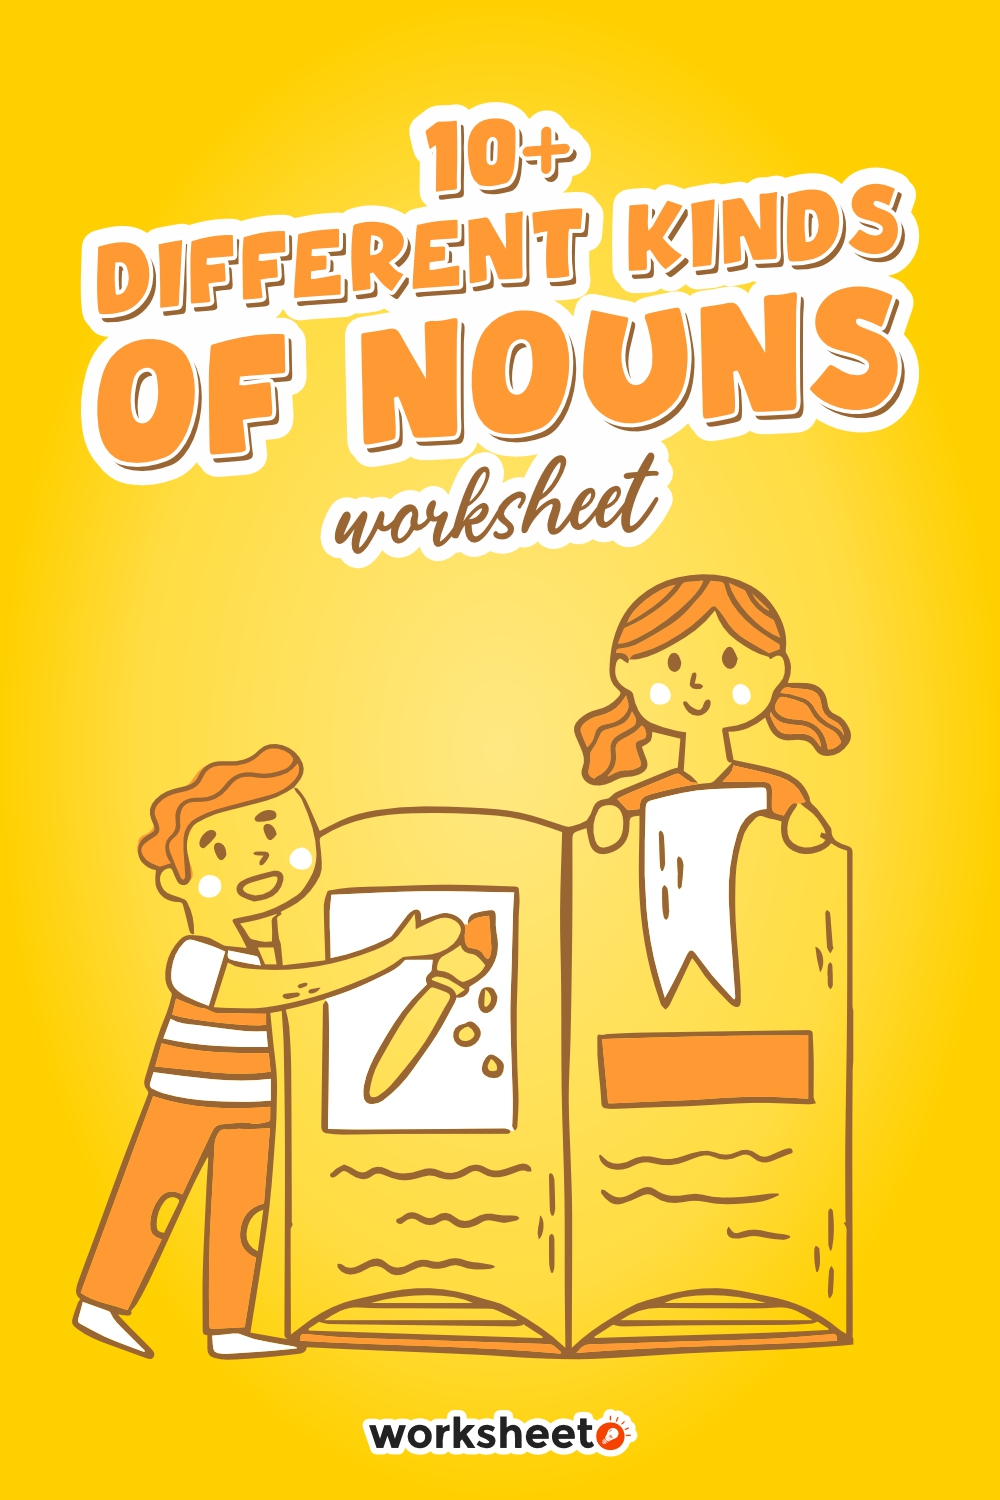 17-different-kinds-of-nouns-worksheet-free-pdf-at-worksheeto